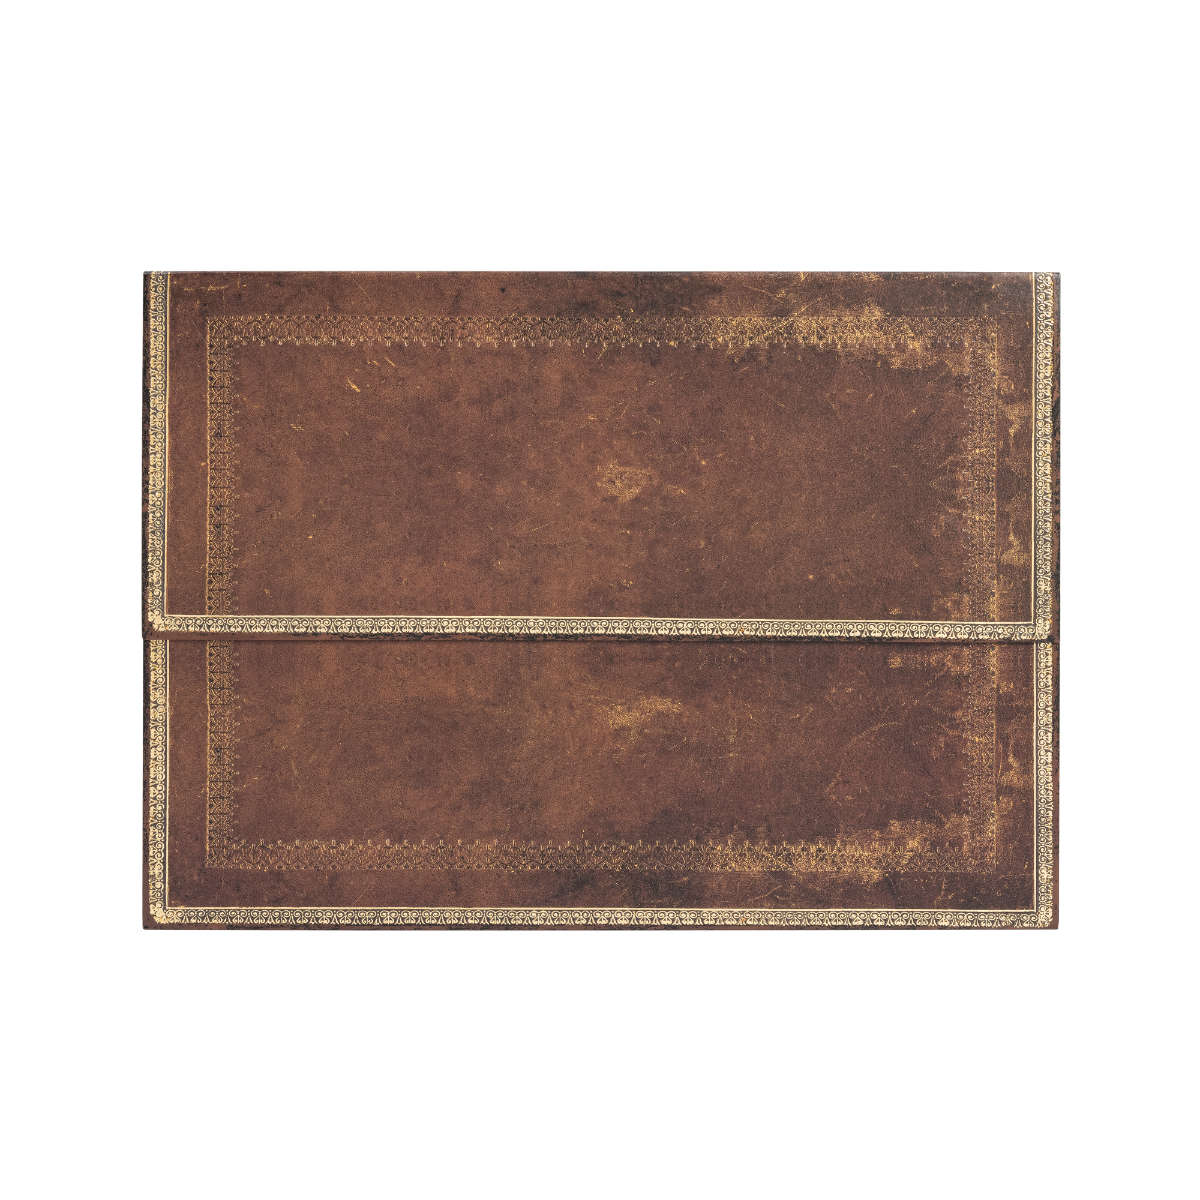 Paperblanks Old Leather Sierra Document Folder